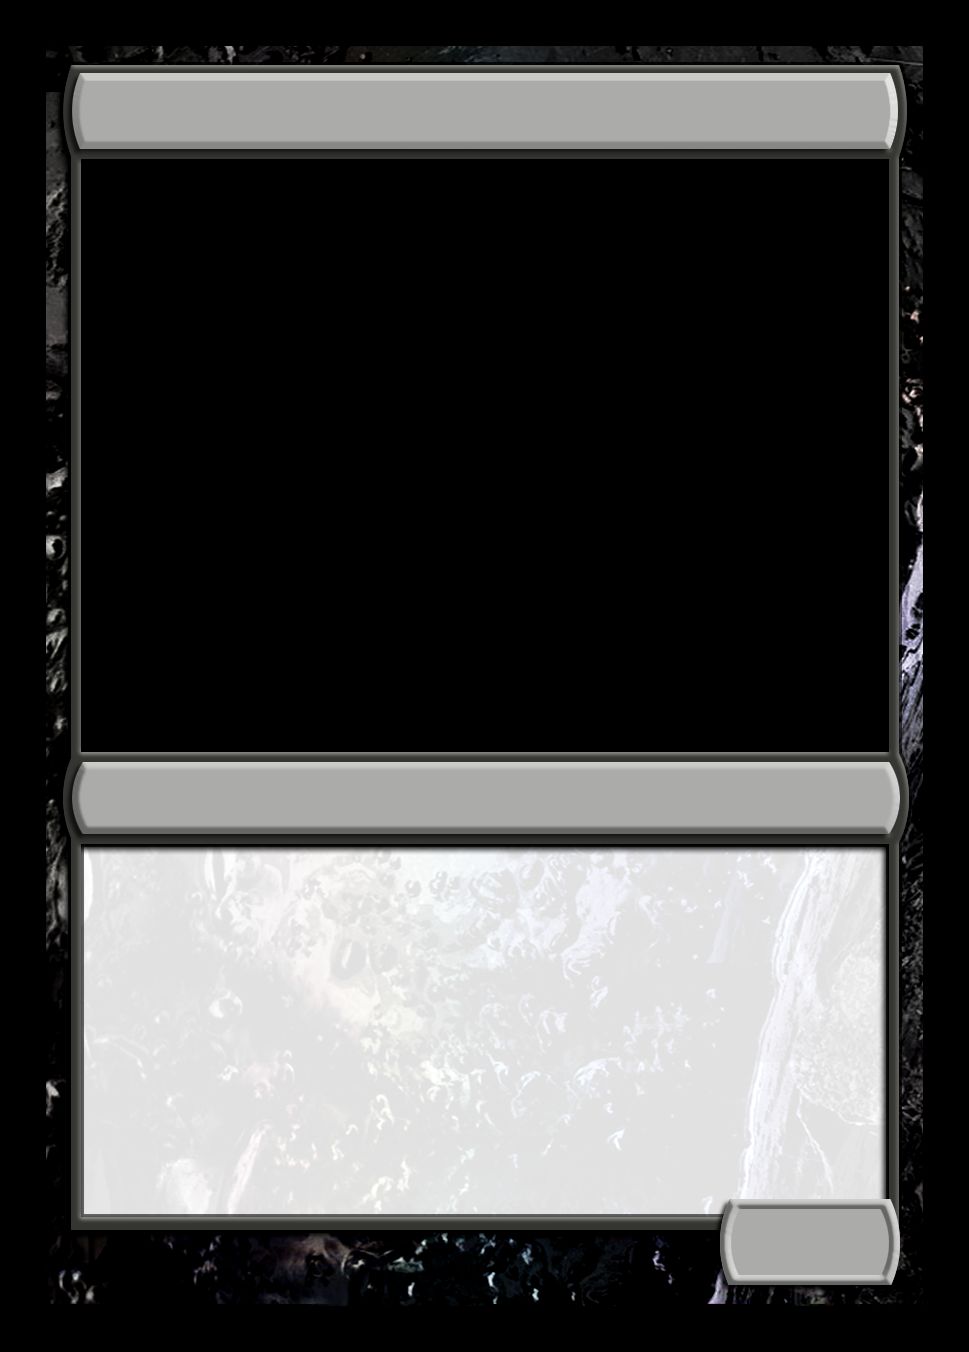 Black Magic the gathering card Meme Generator - Imgflip Inside Blank Magic Card Template